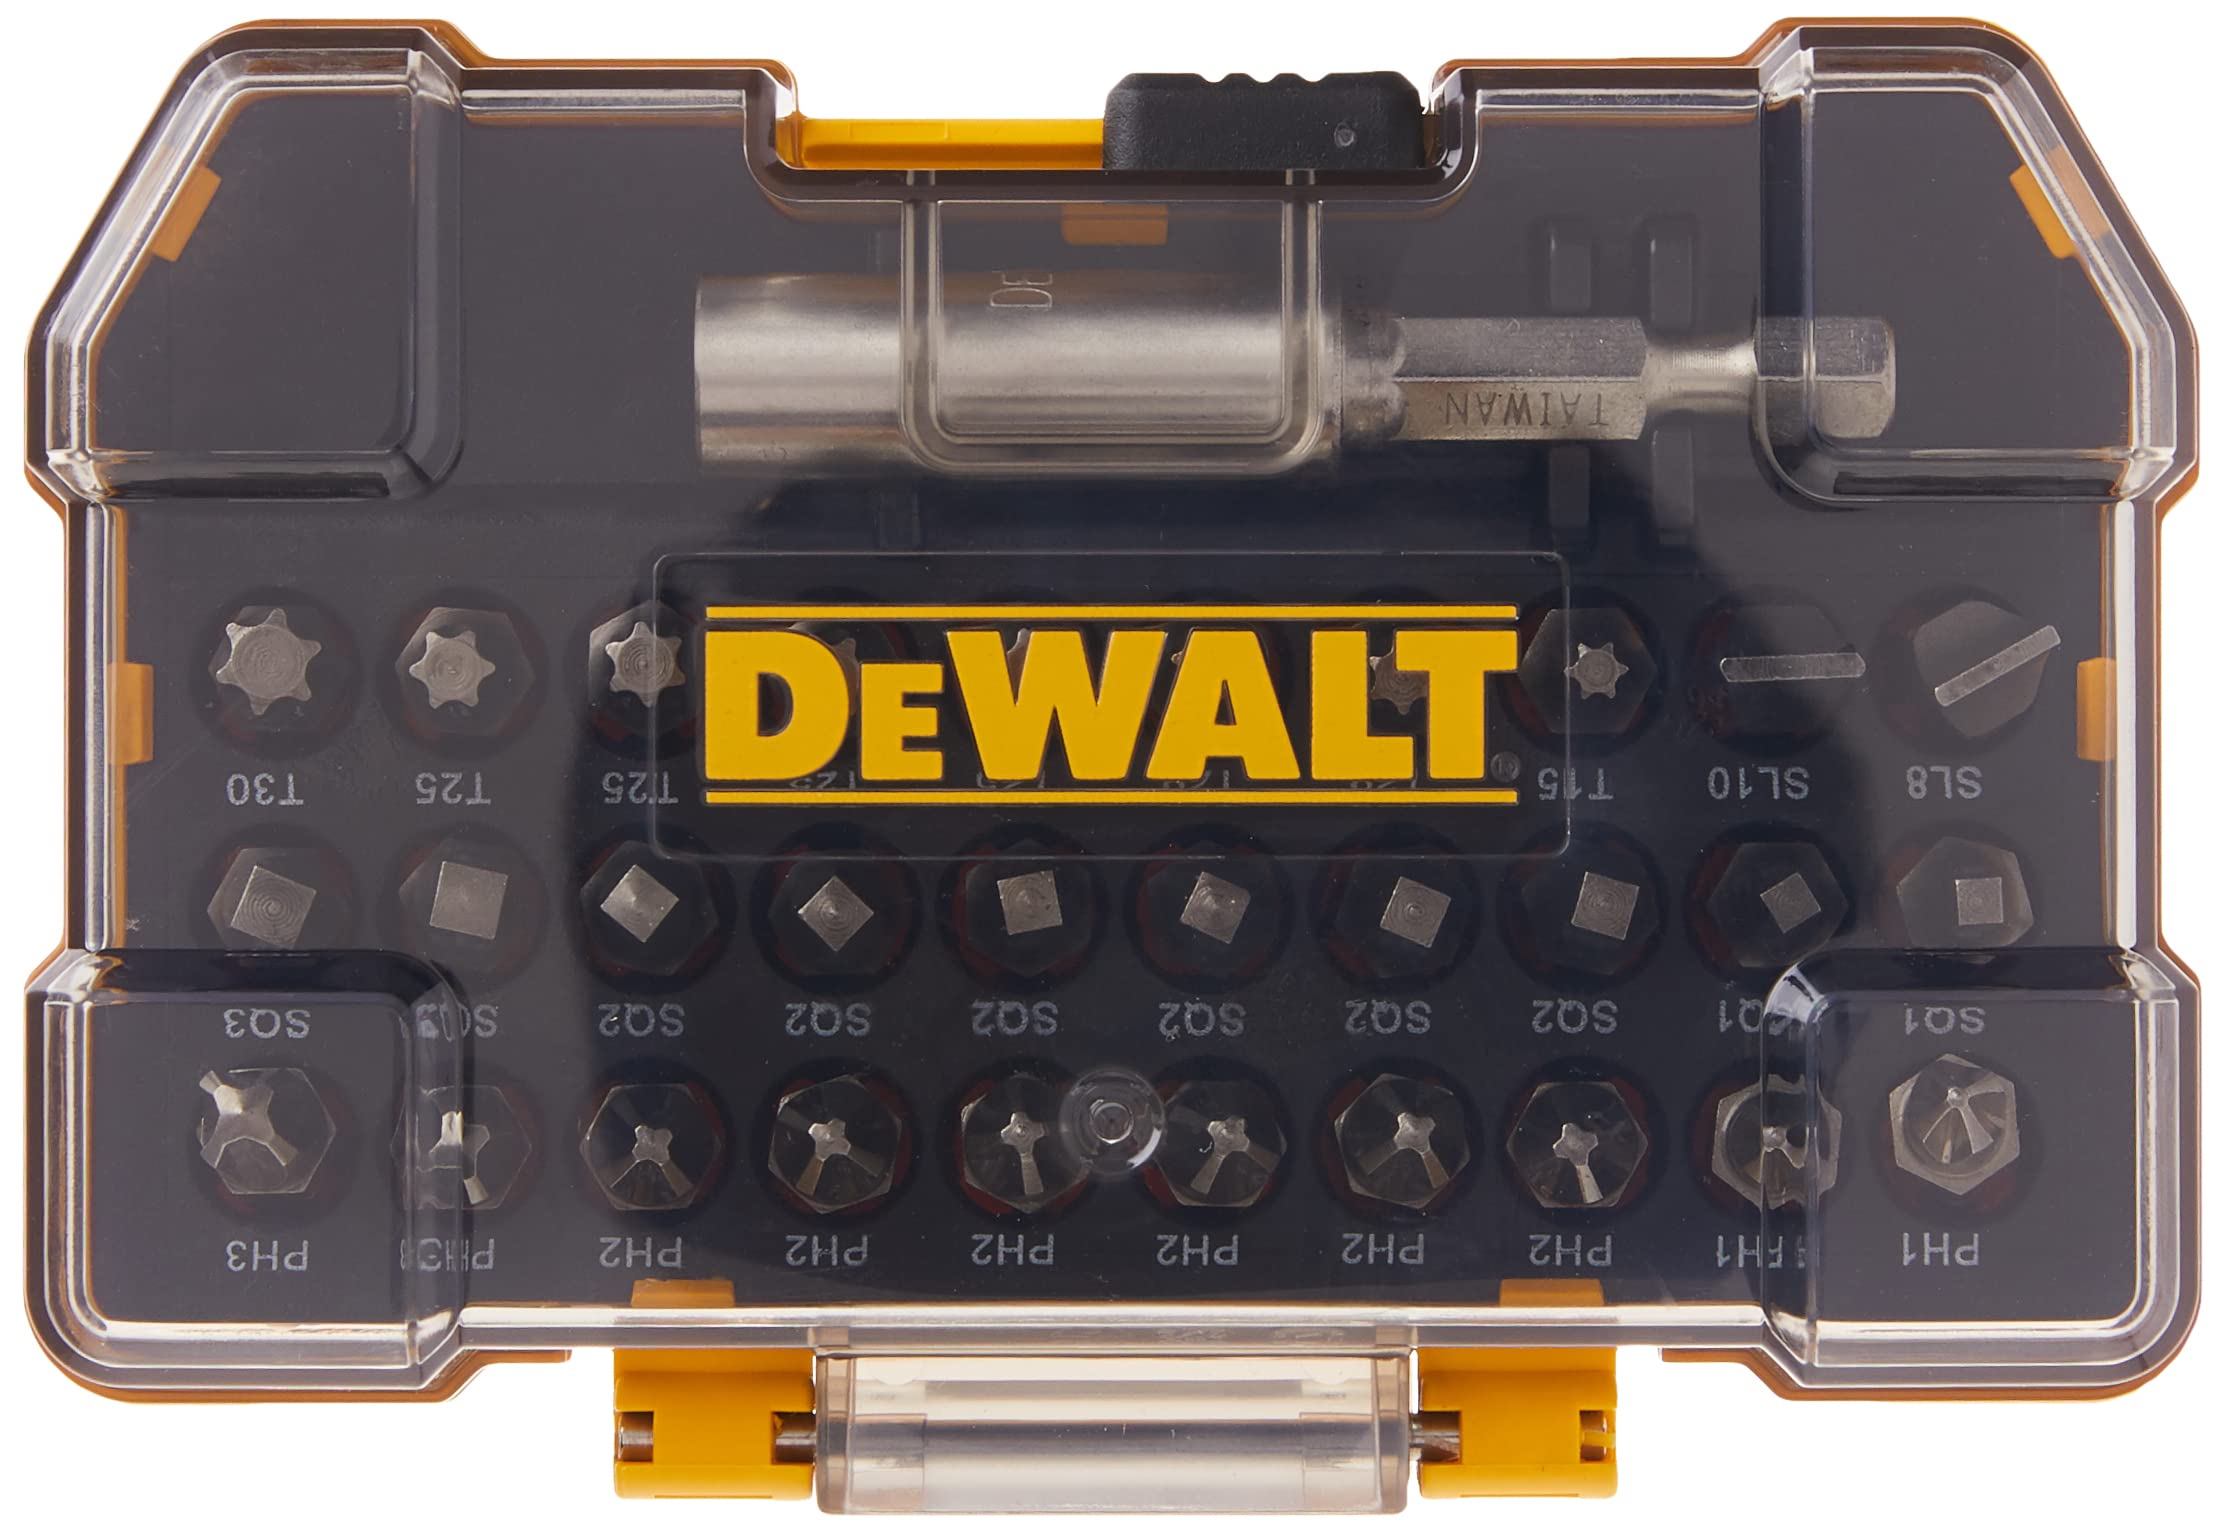 31-Piece DEWALT DWAX100 Screwdriving Set $10 + Free Shipping w/ Prime or on $35+